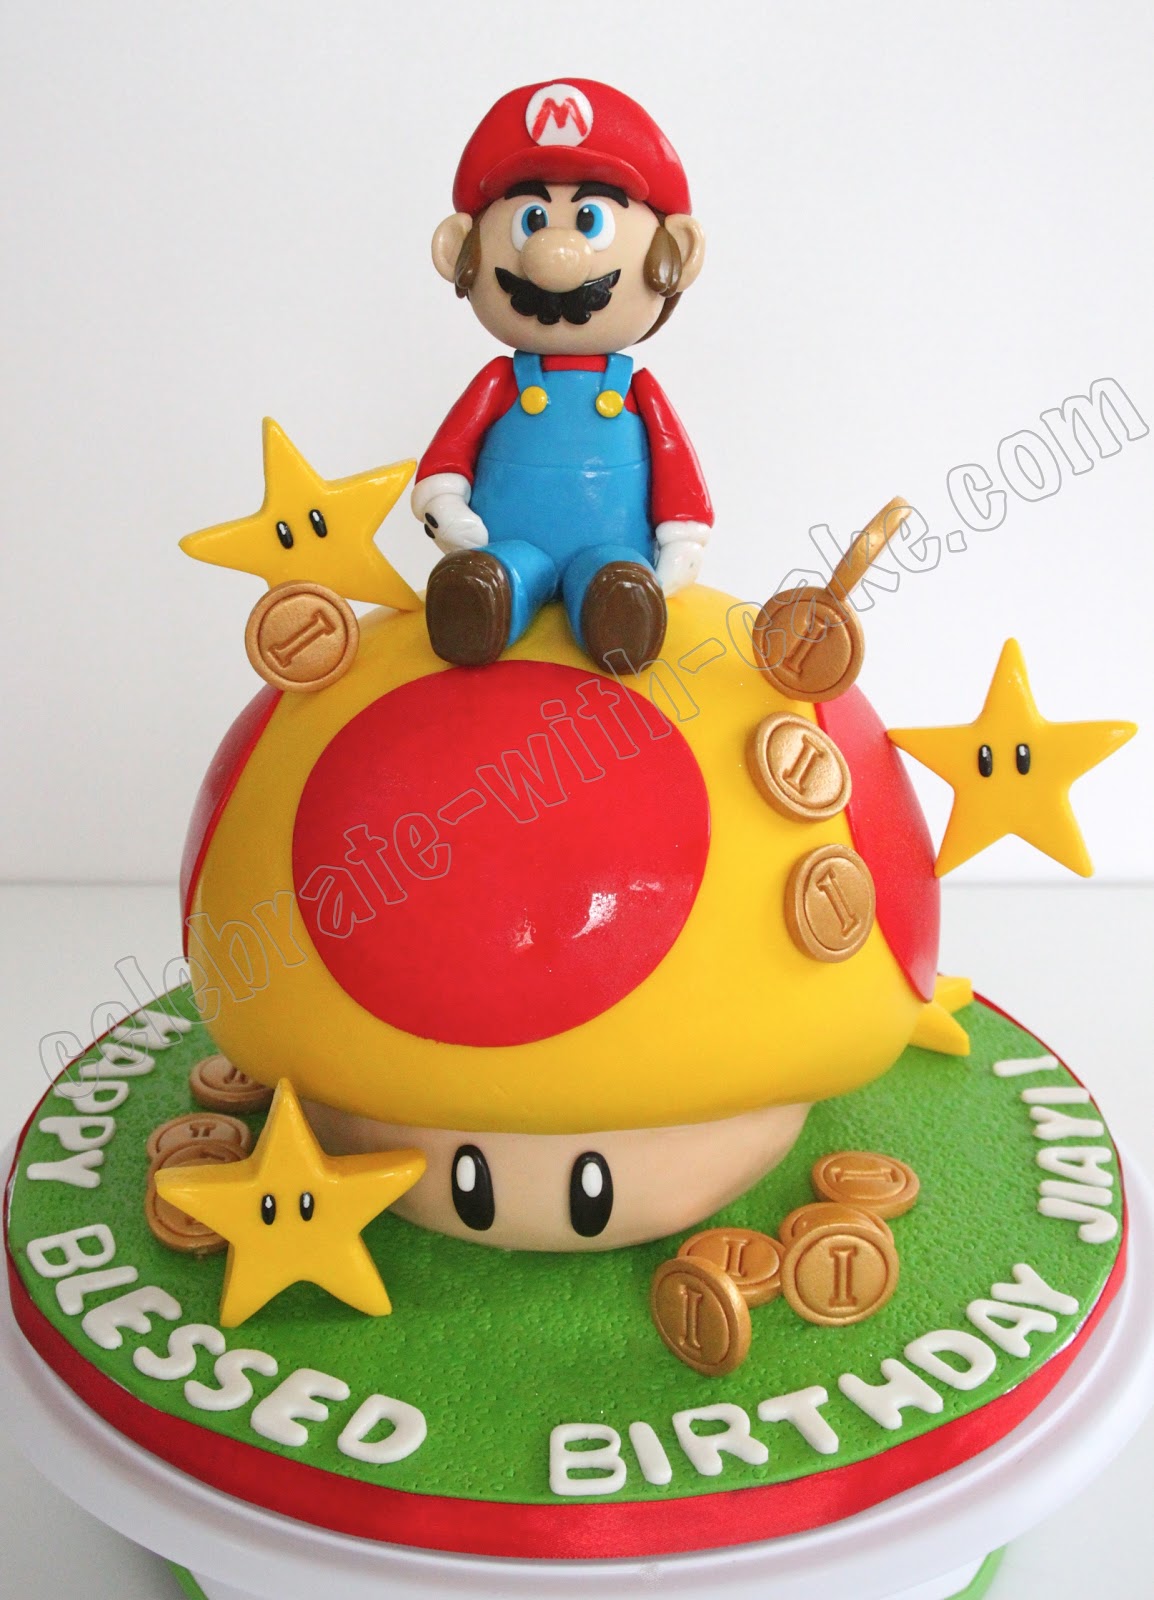 Celebrate with Cake!: Super Mario Cake